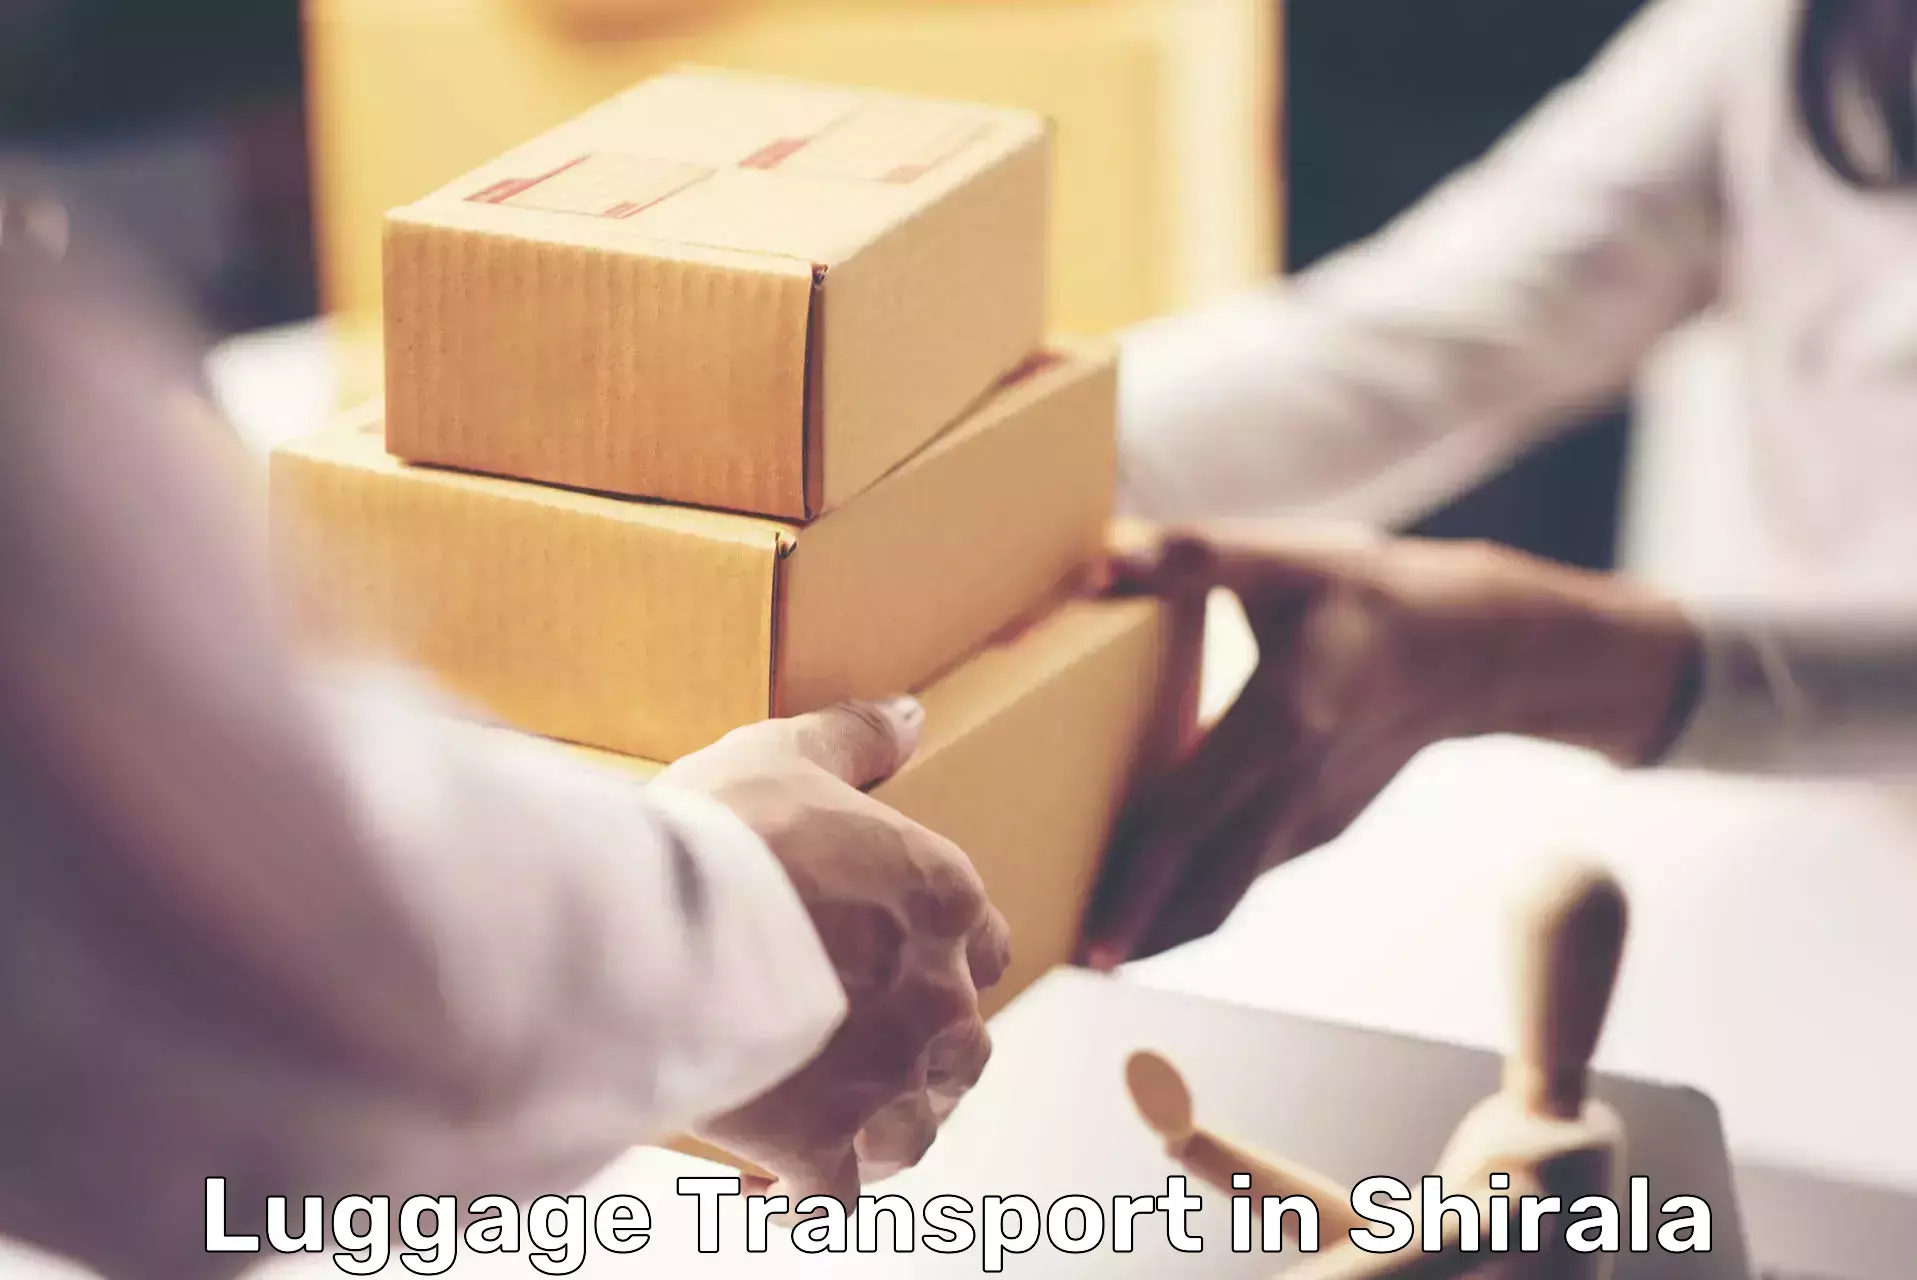 Luggage forwarding service in Shirala